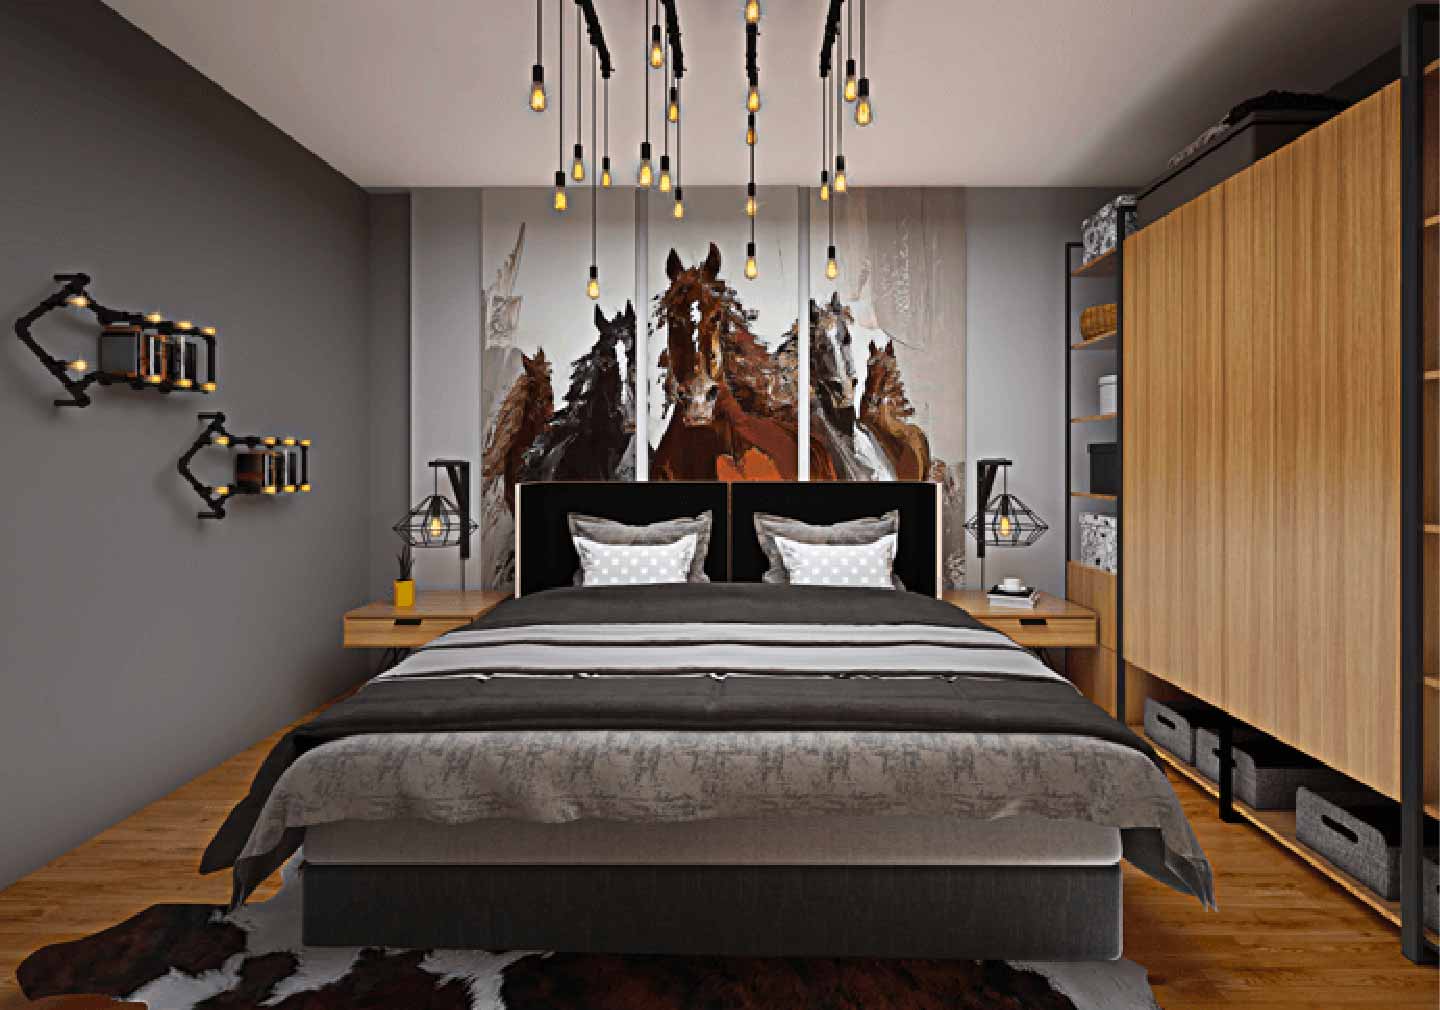 A Scenic Background - Bedroom Interior Design